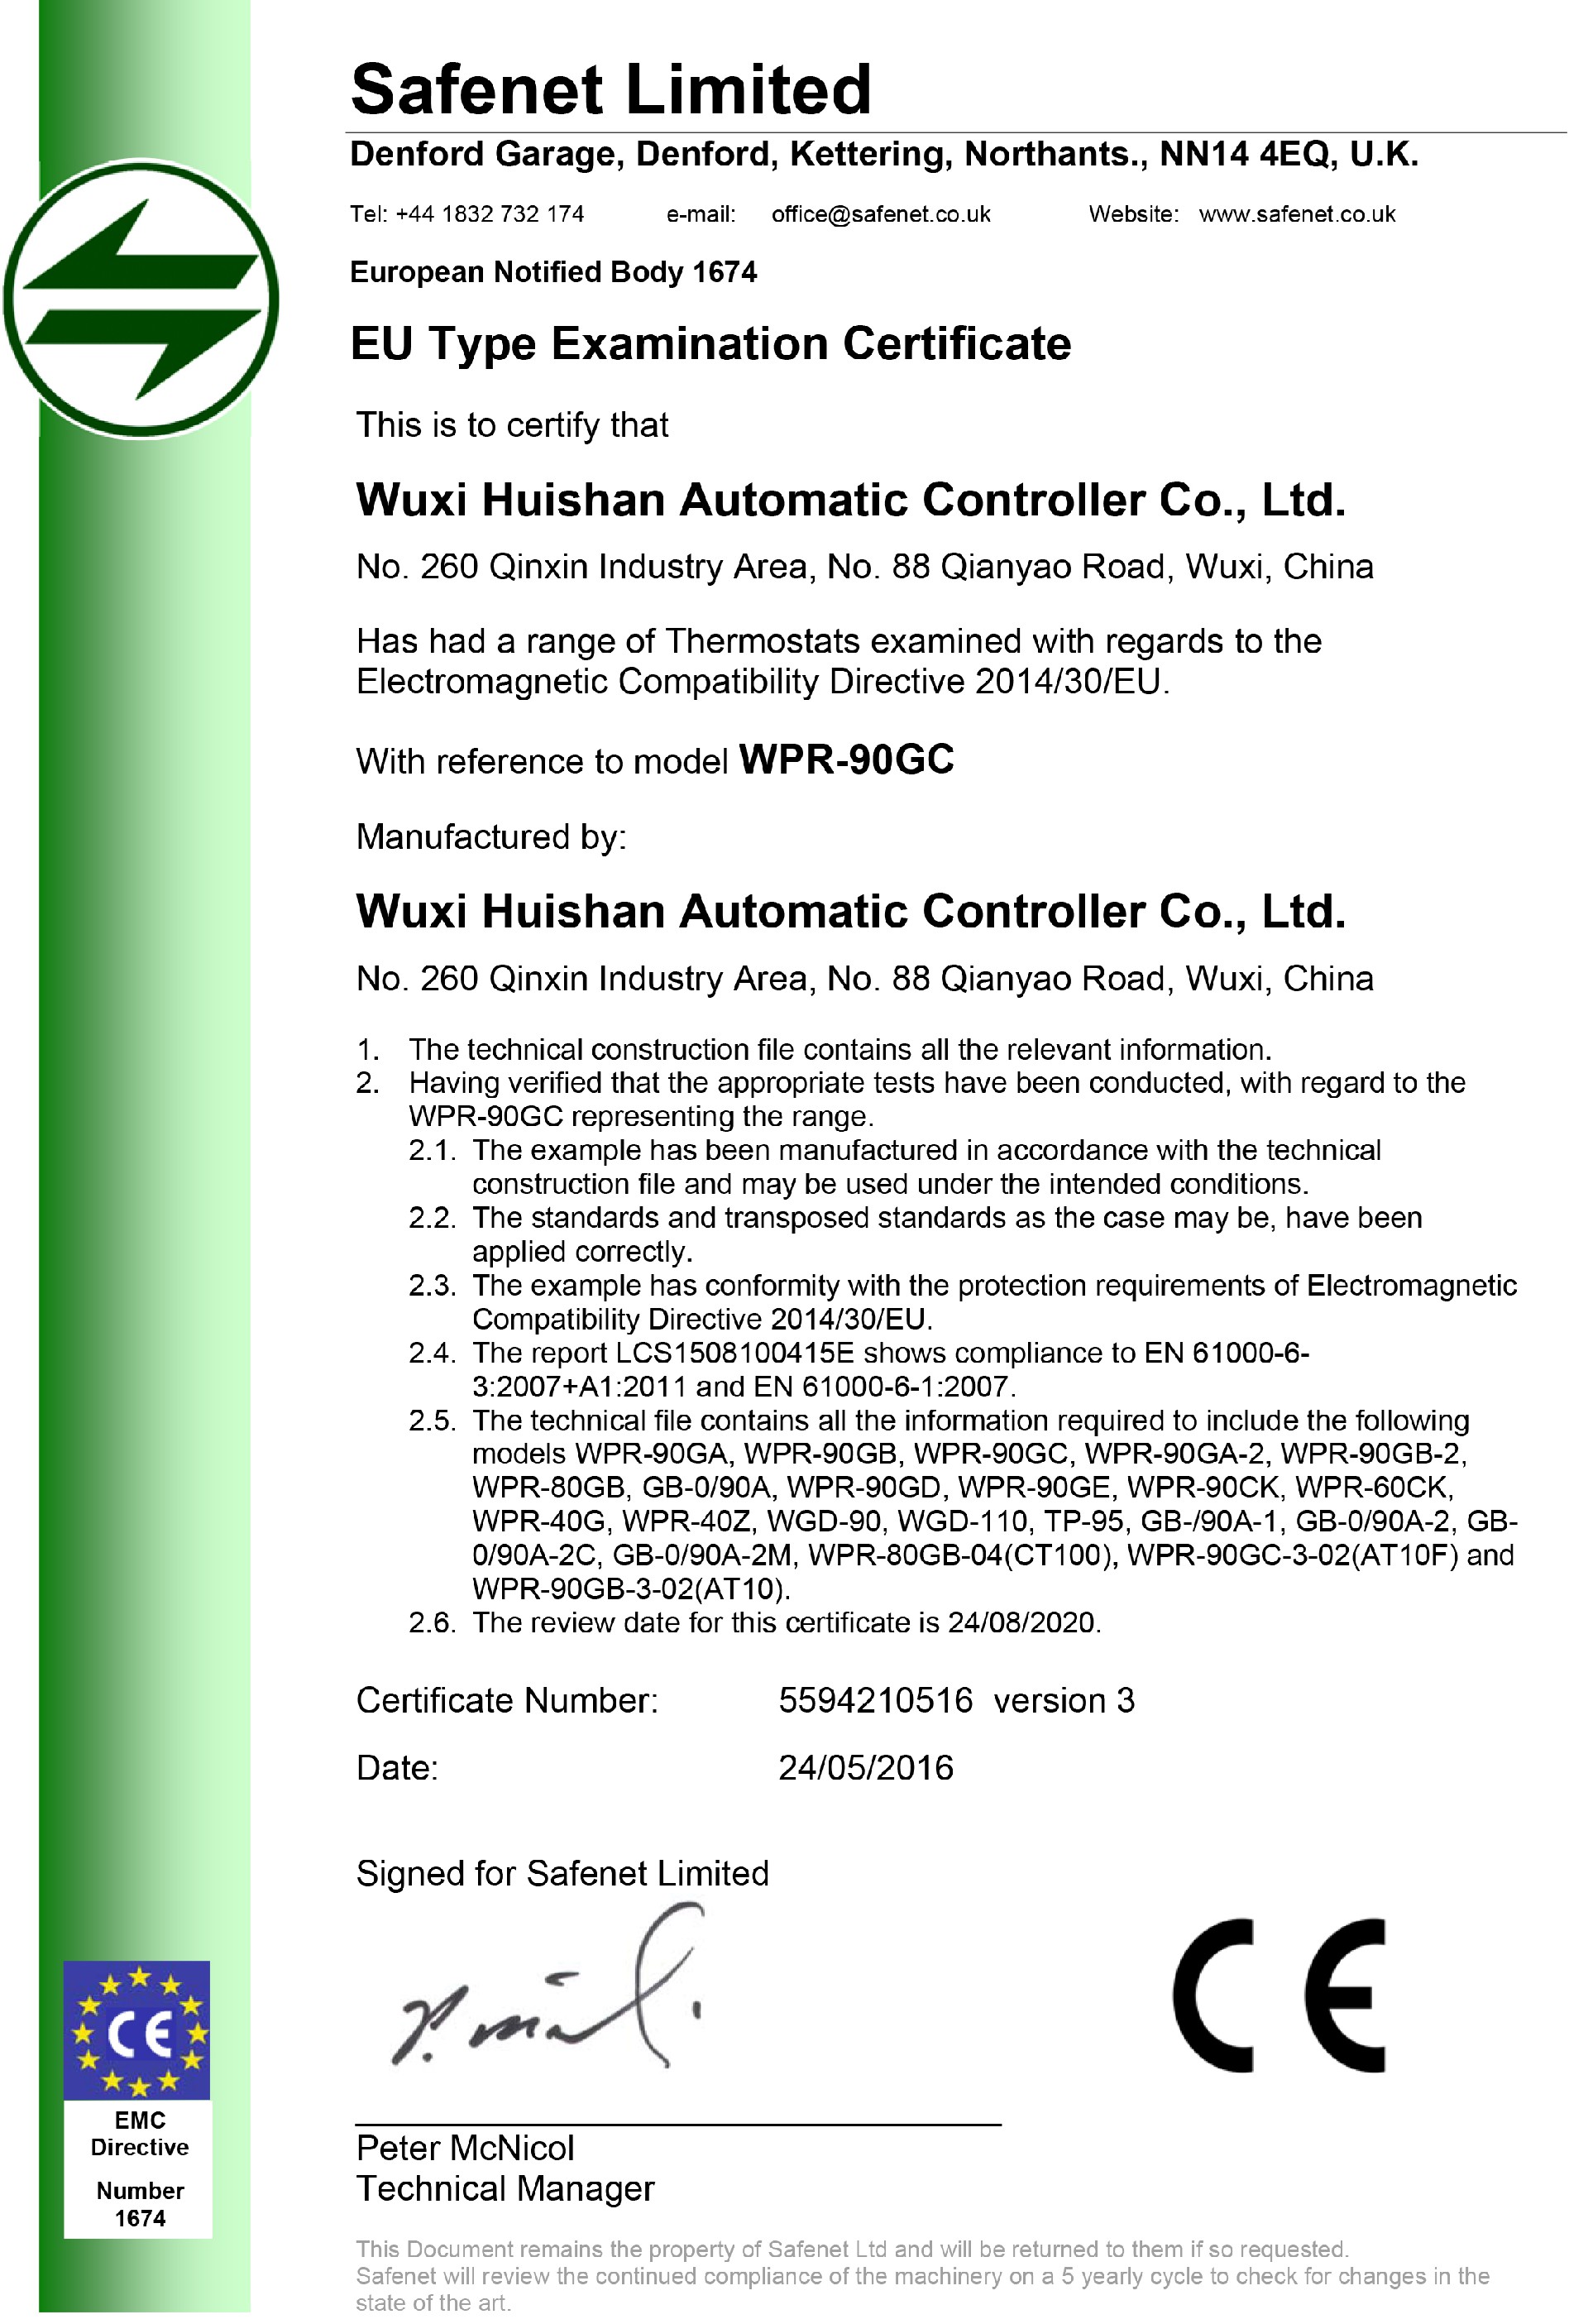 5594210516 - WPR-90GC Thermostat EMC Certificate v3